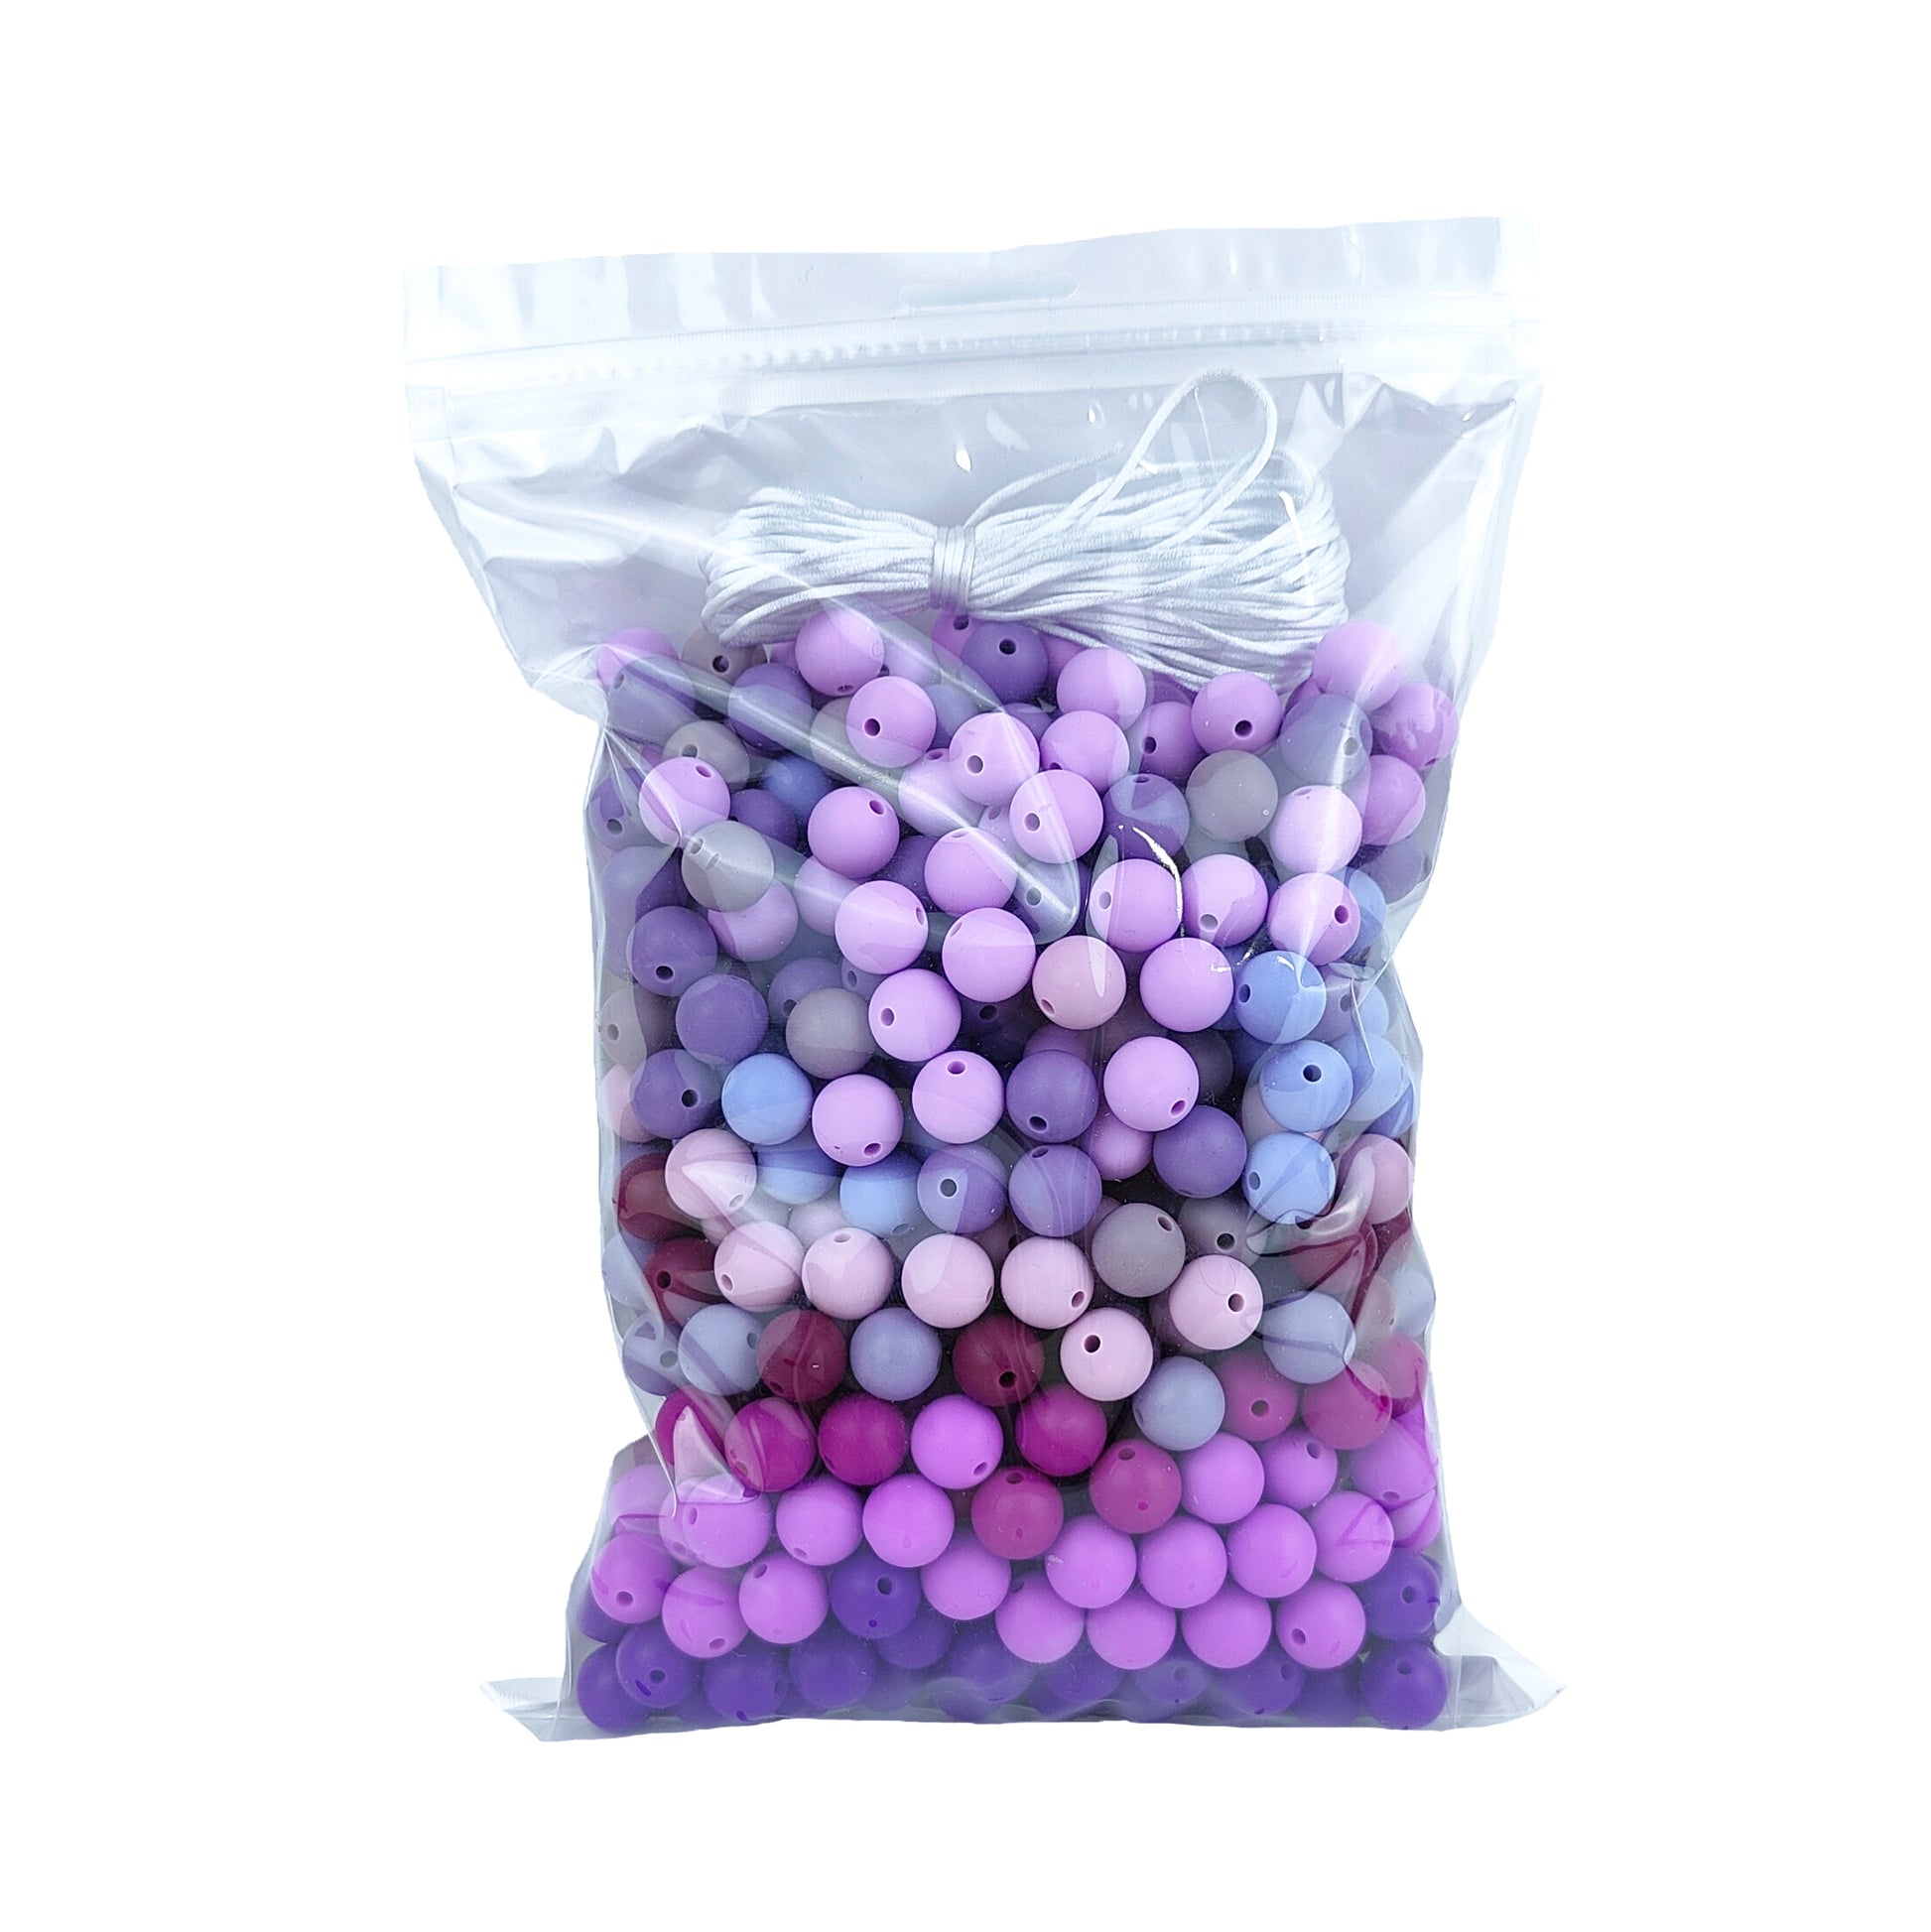 Silicone focal beads wholesale suppliers - Mrbite - Medium